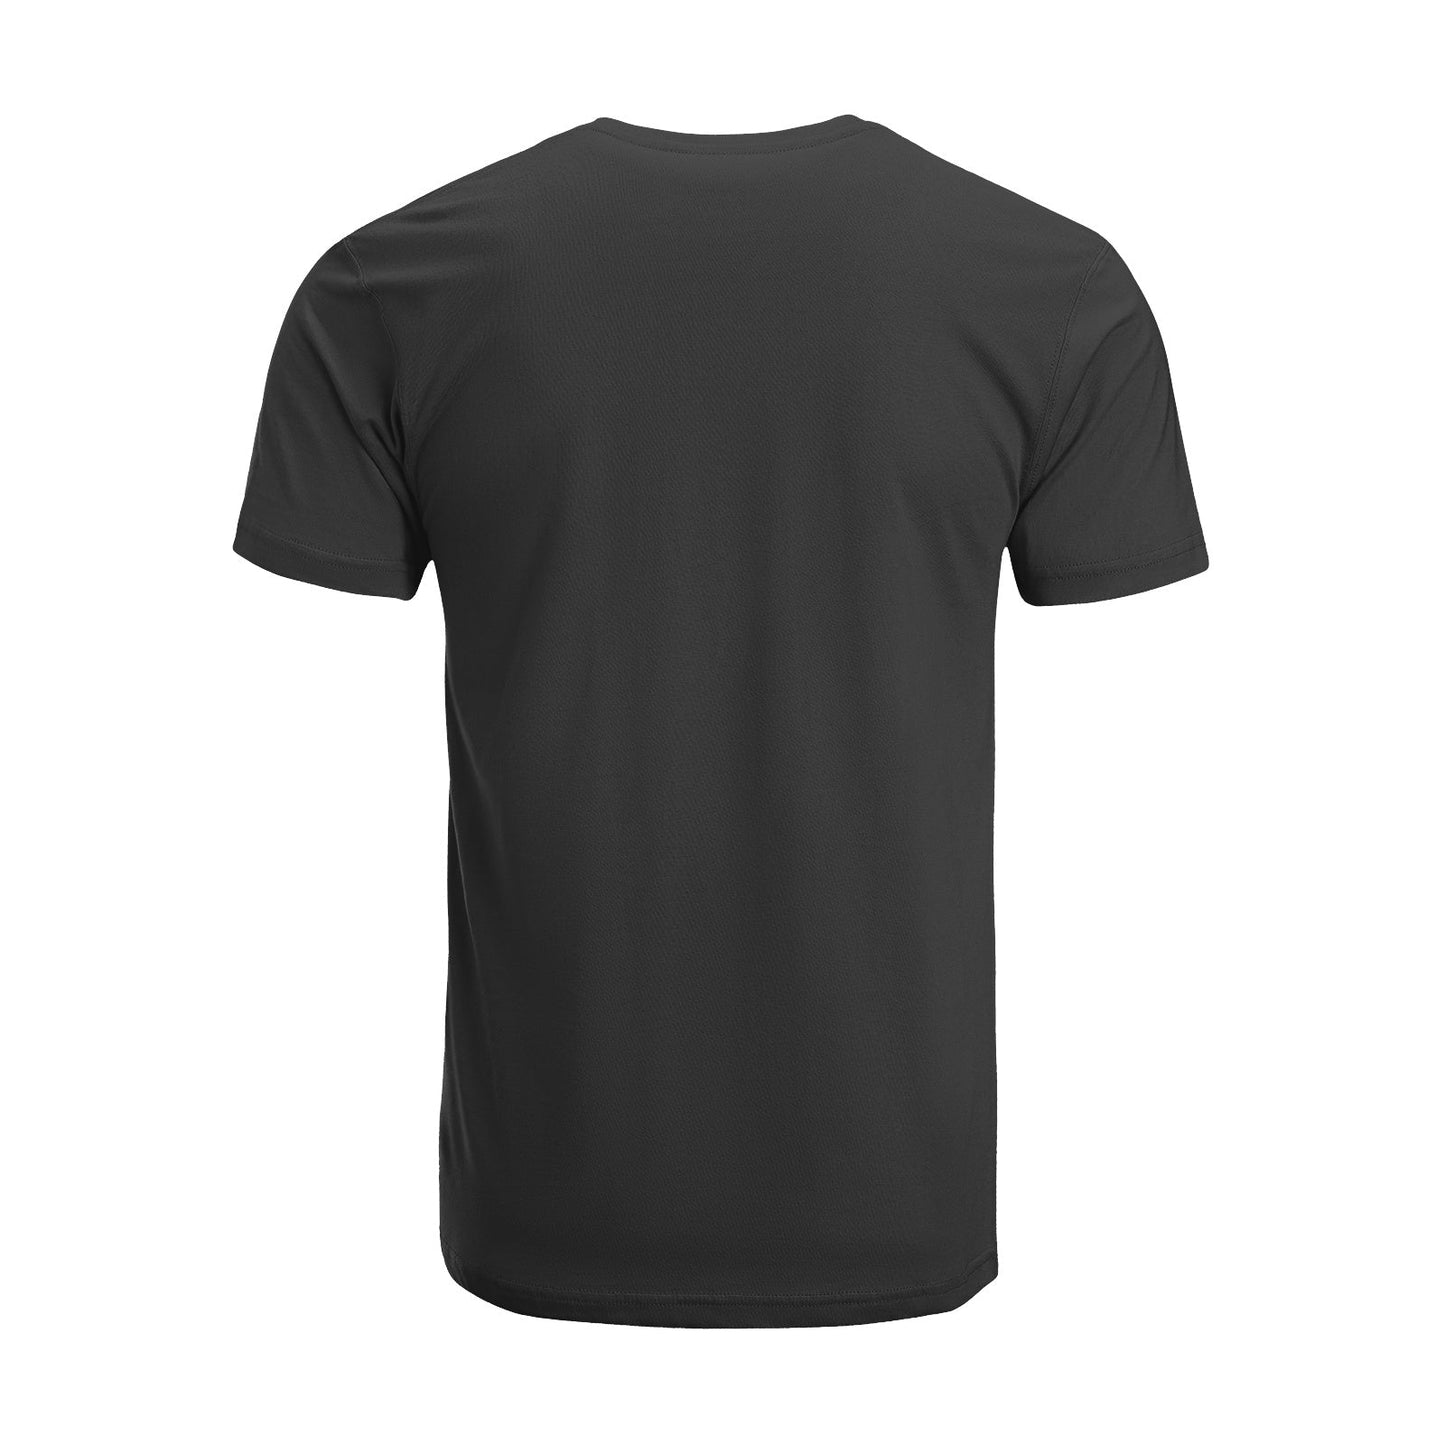 Unisex Short Sleeve Crew Neck Cotton Jersey T-Shirt CAT 44 - Tara-Outfits.com